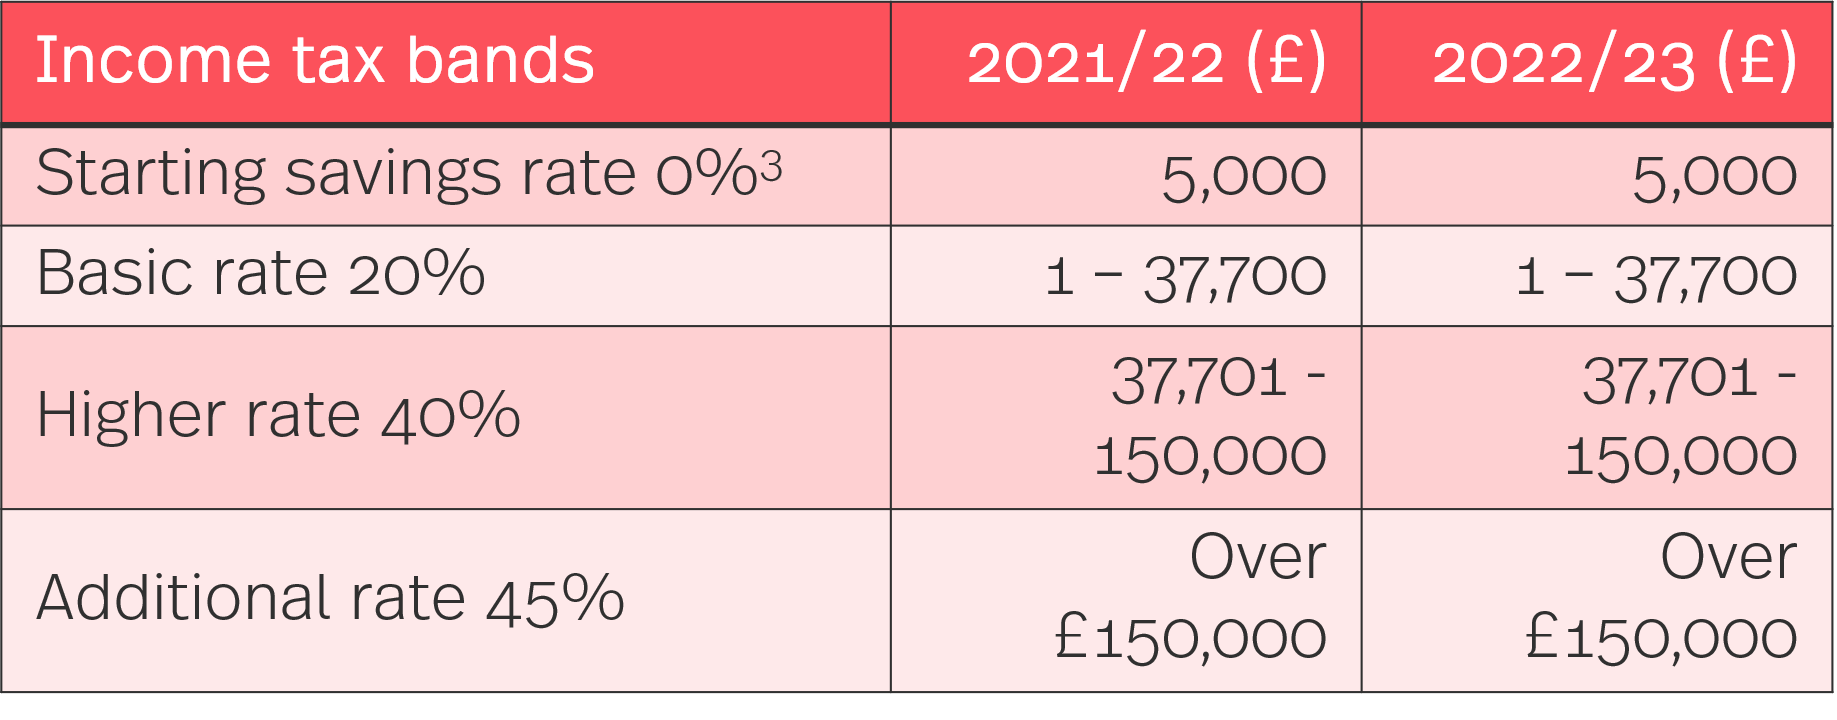 Hmrc Rates And Thresholds 2023 2024 Image to u